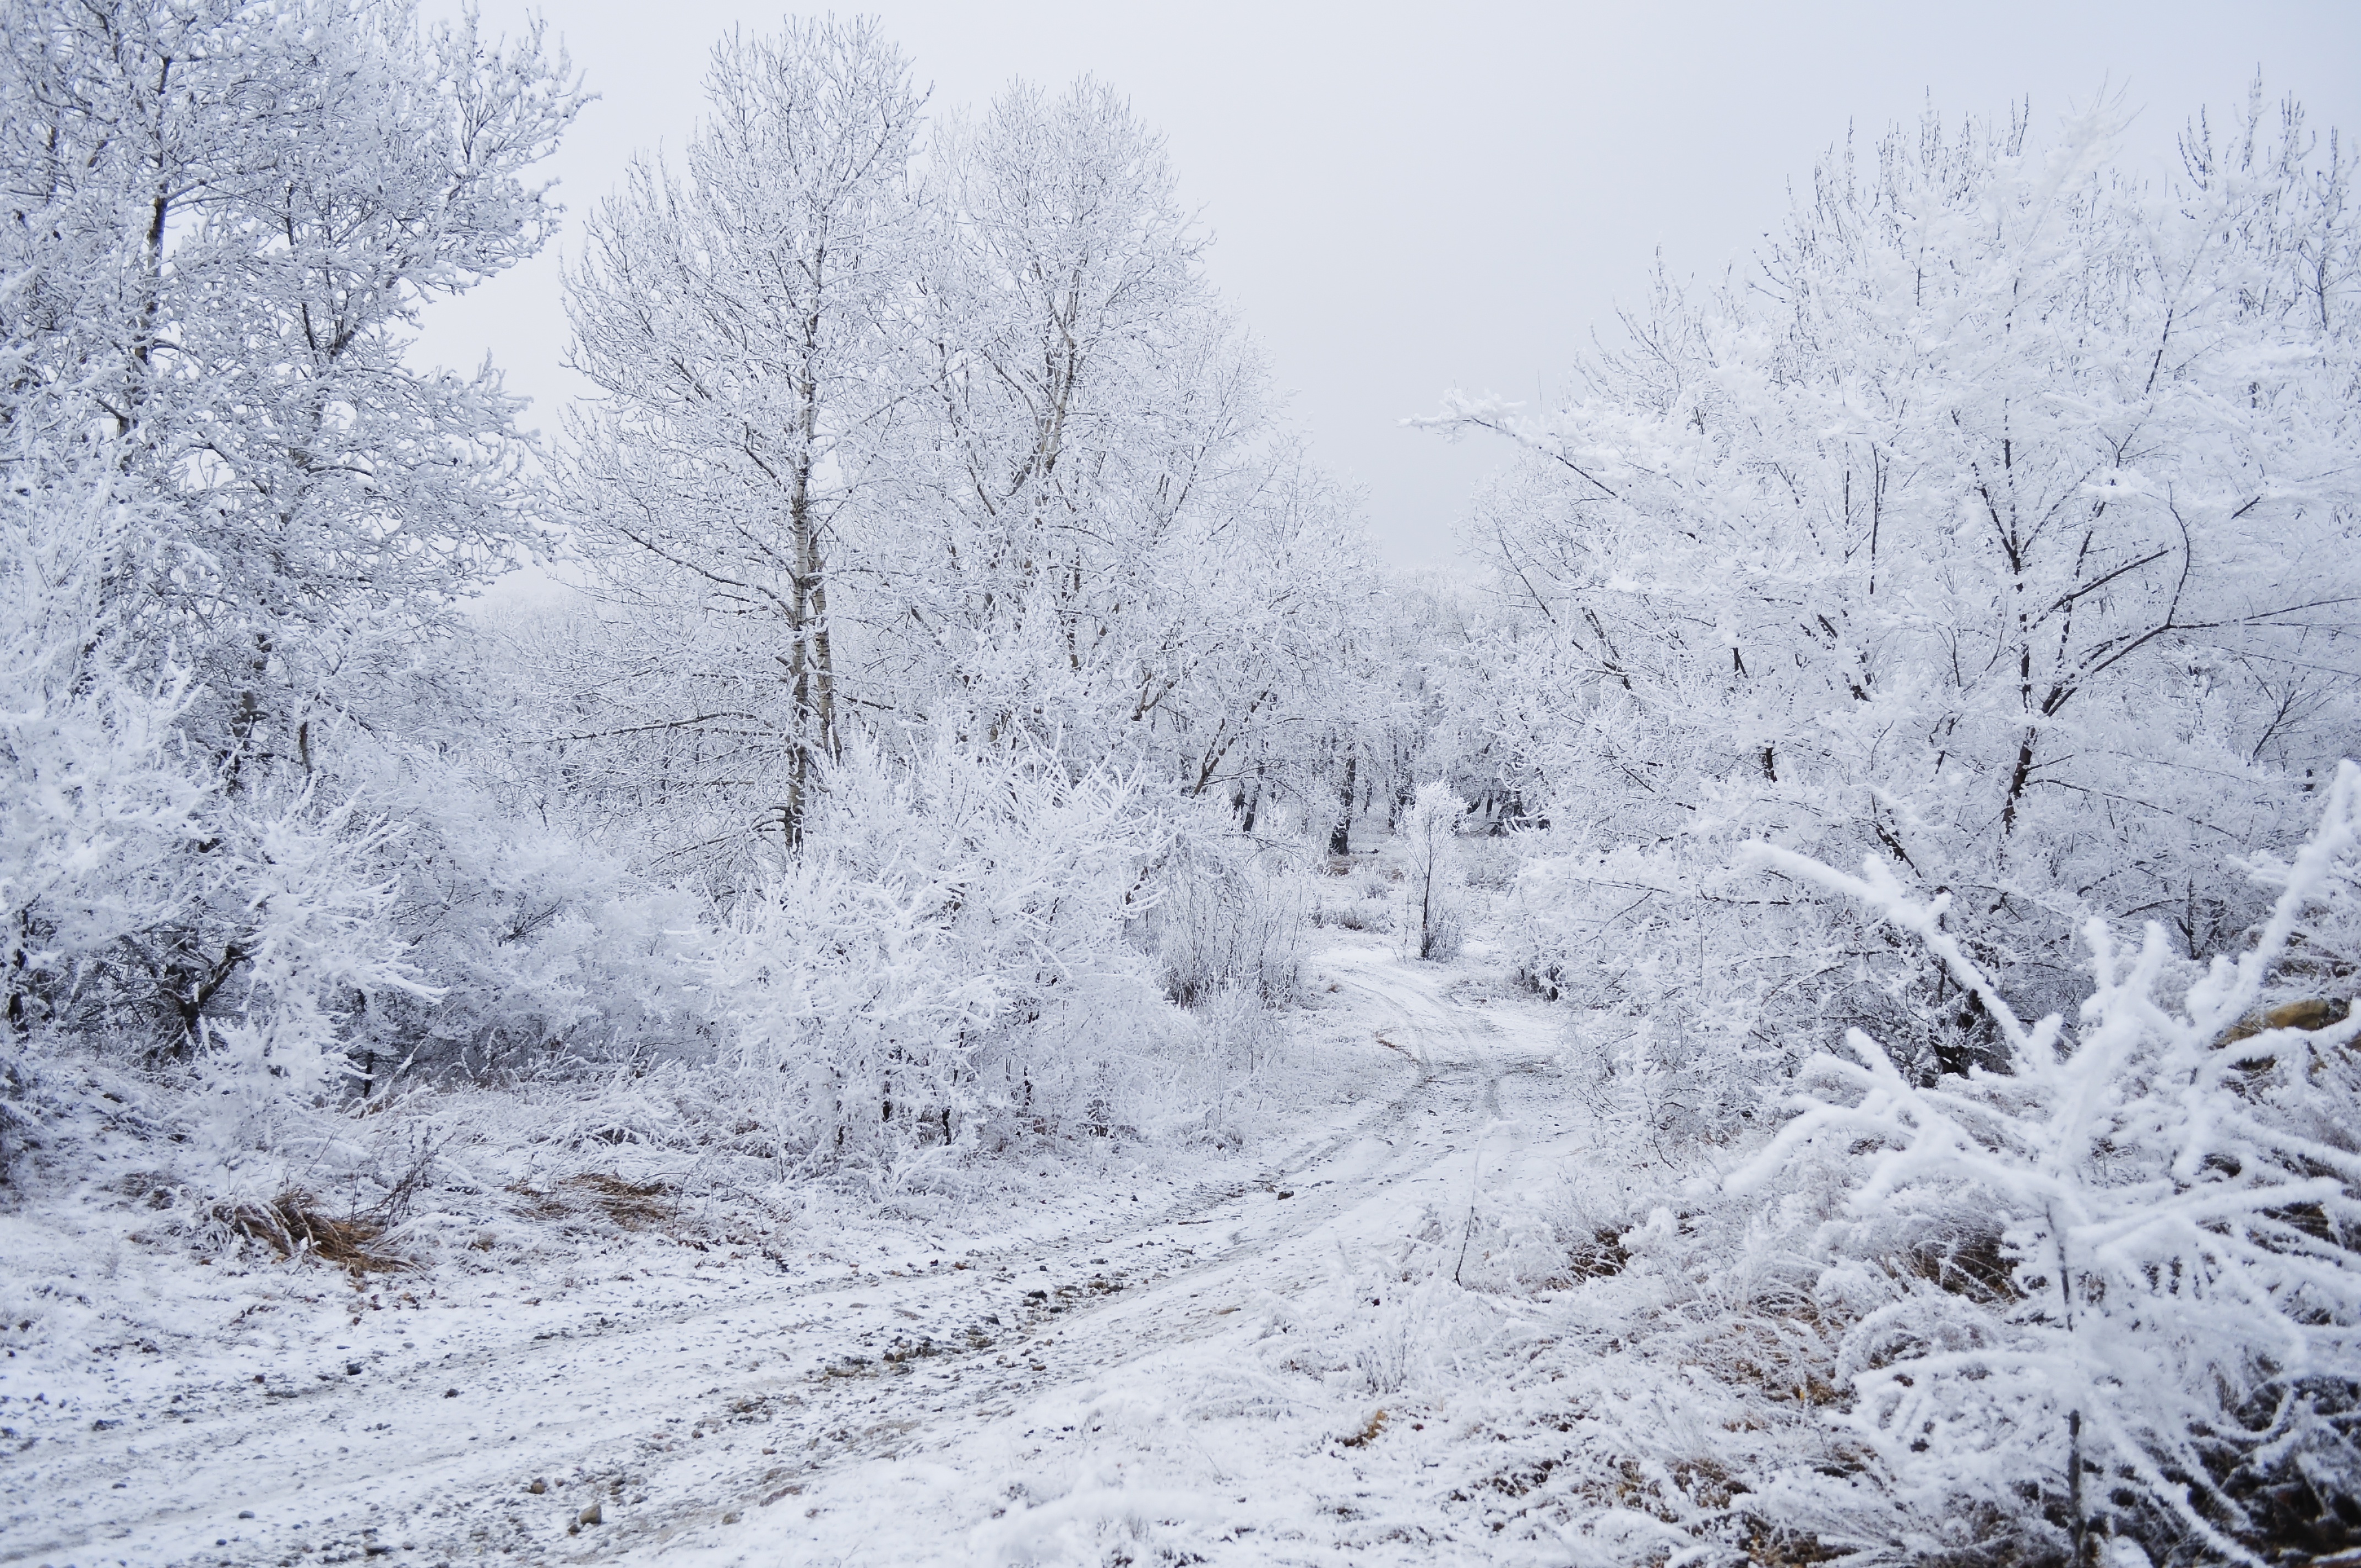 Snowfall. Деревья в снегу. Заснеженные деревья. Зима деревья в снегу. Белый зимний лес.